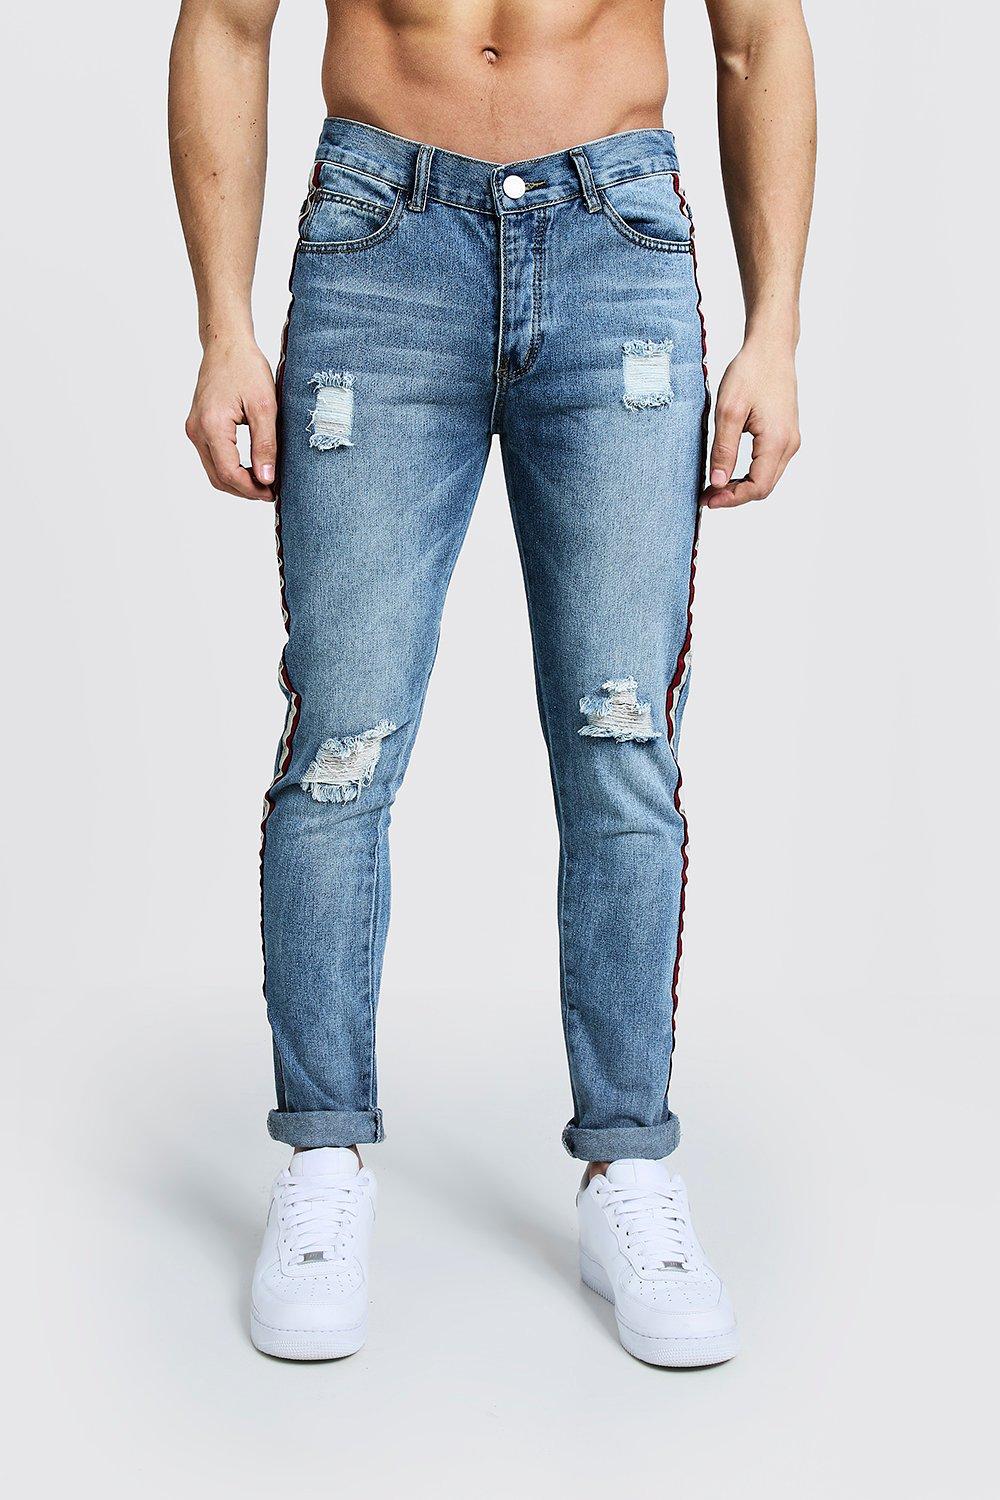 side tape jeans mens